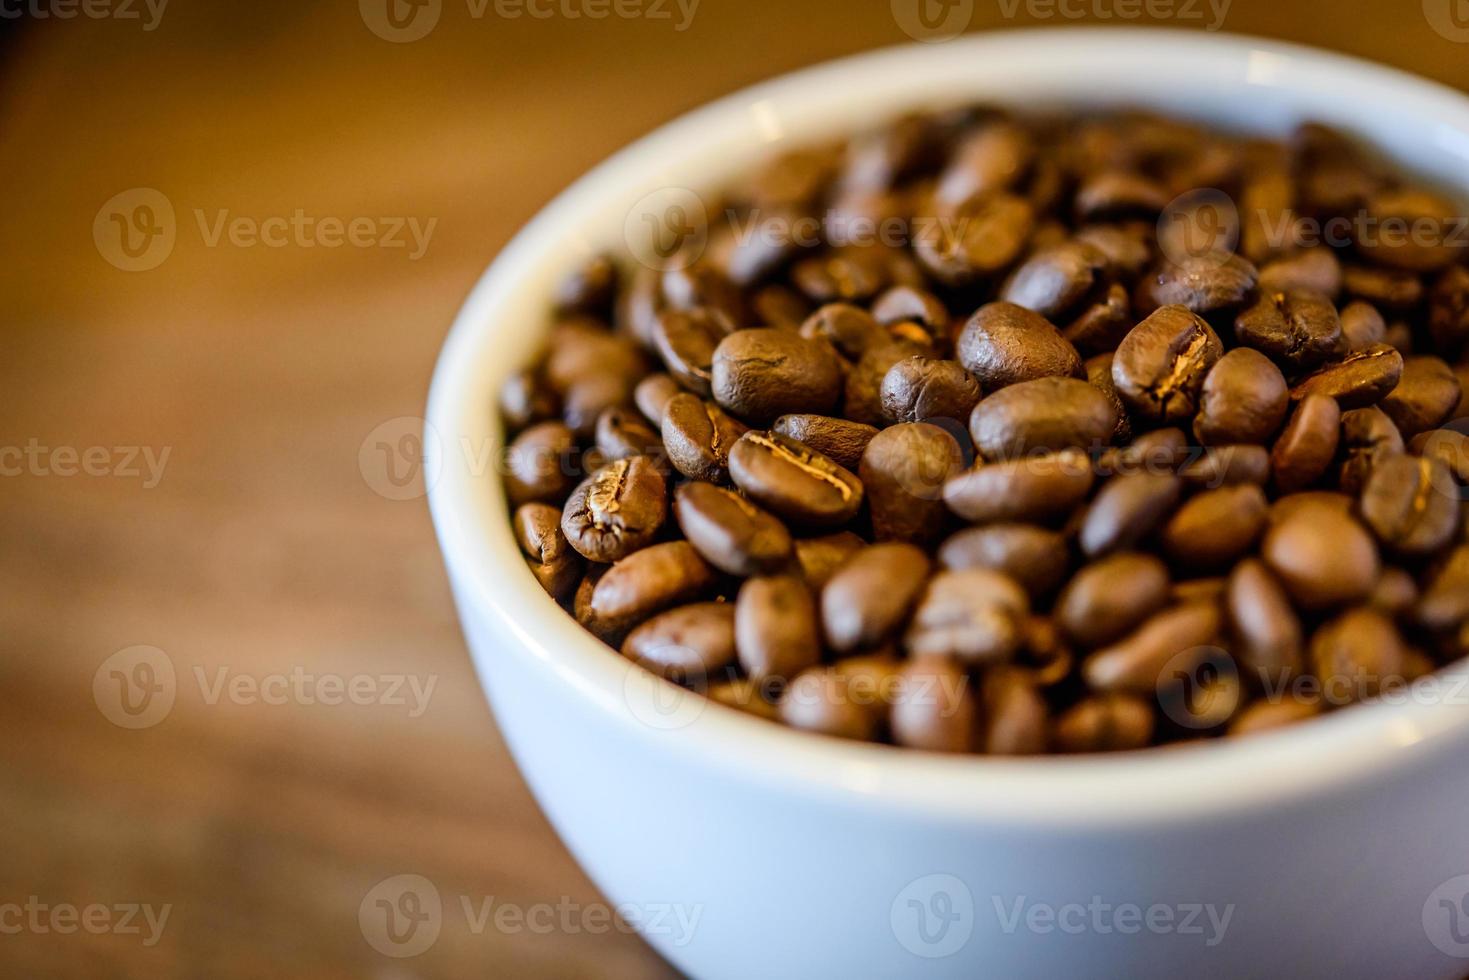 koffiebonen in cup op houten grunge achtergrond foto